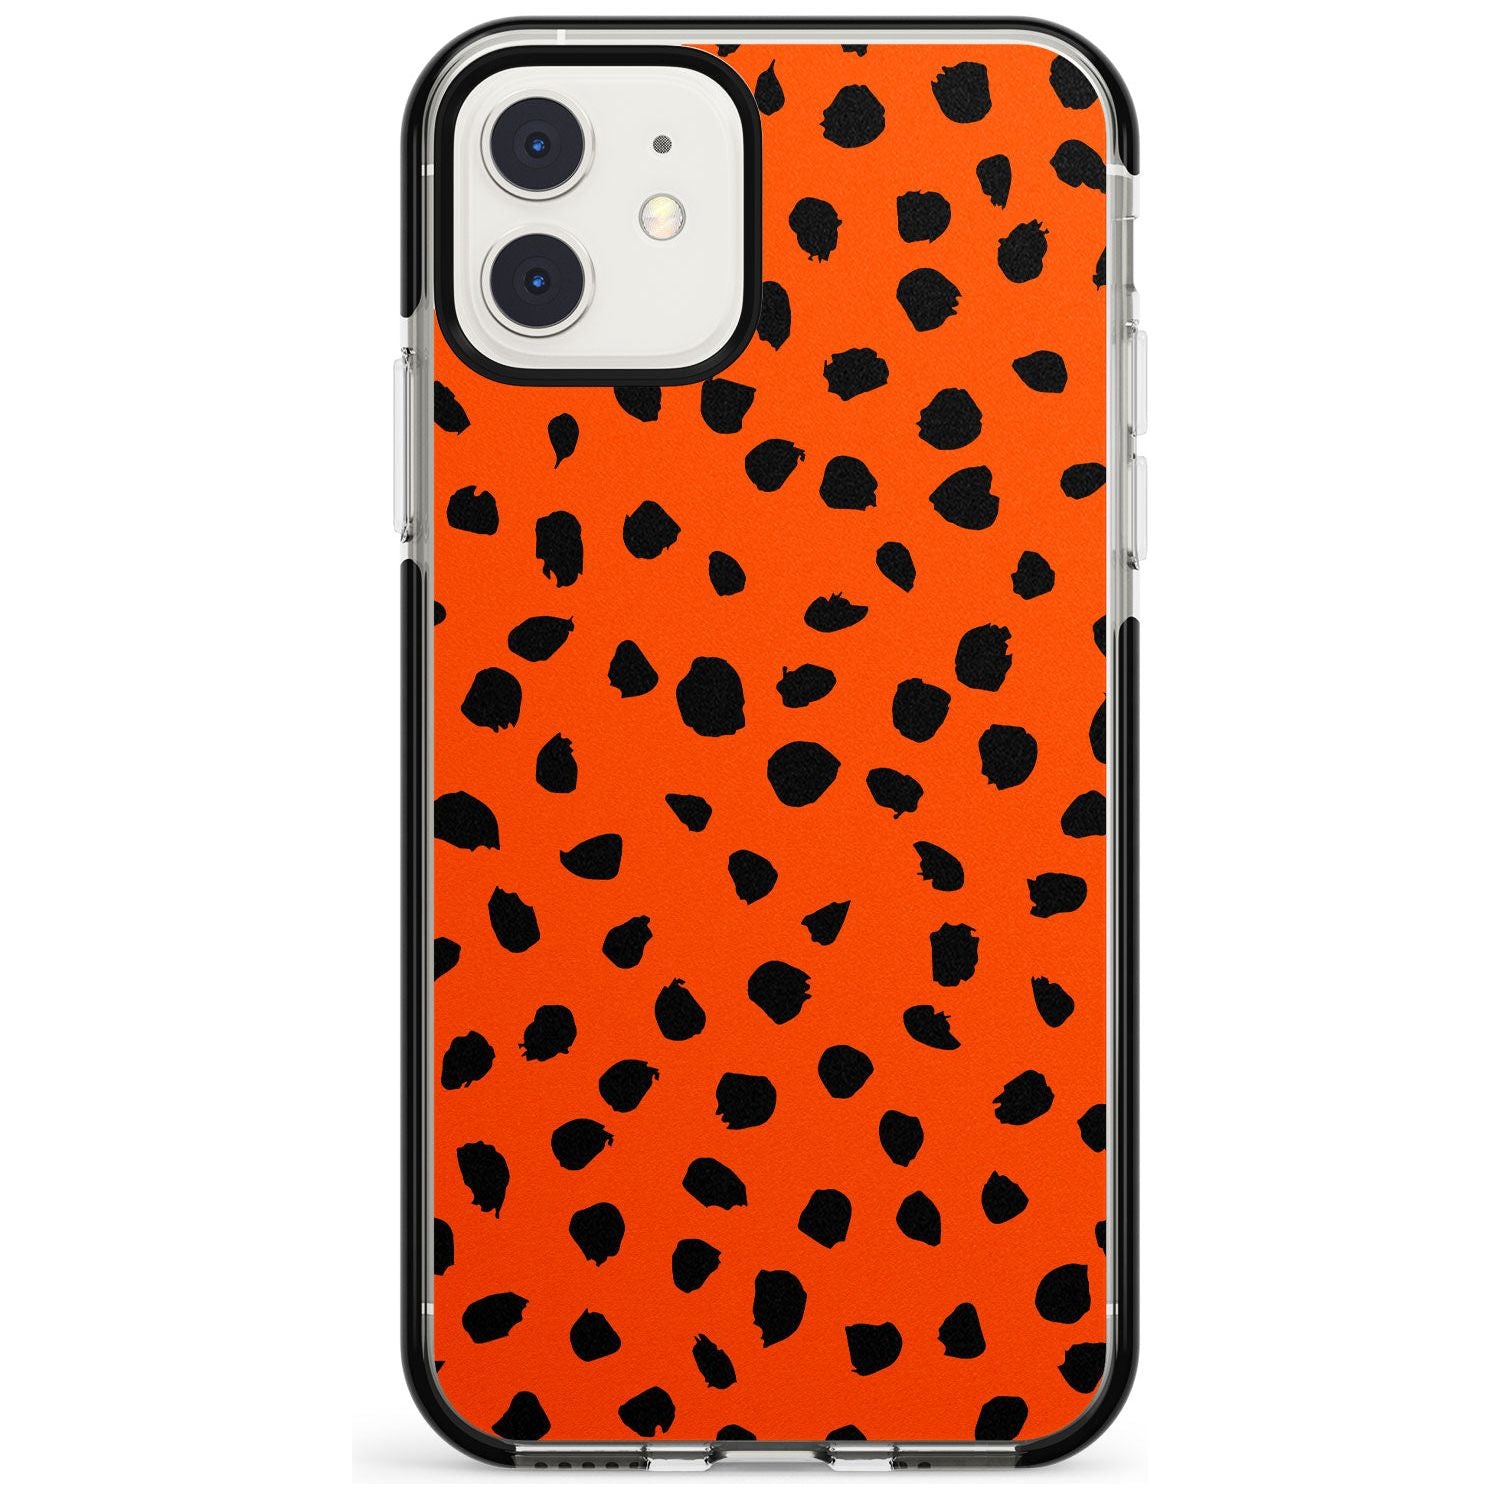 Black & Bright Red Dalmatian Polka Dot Spots Black Impact Phone Case for iPhone 11